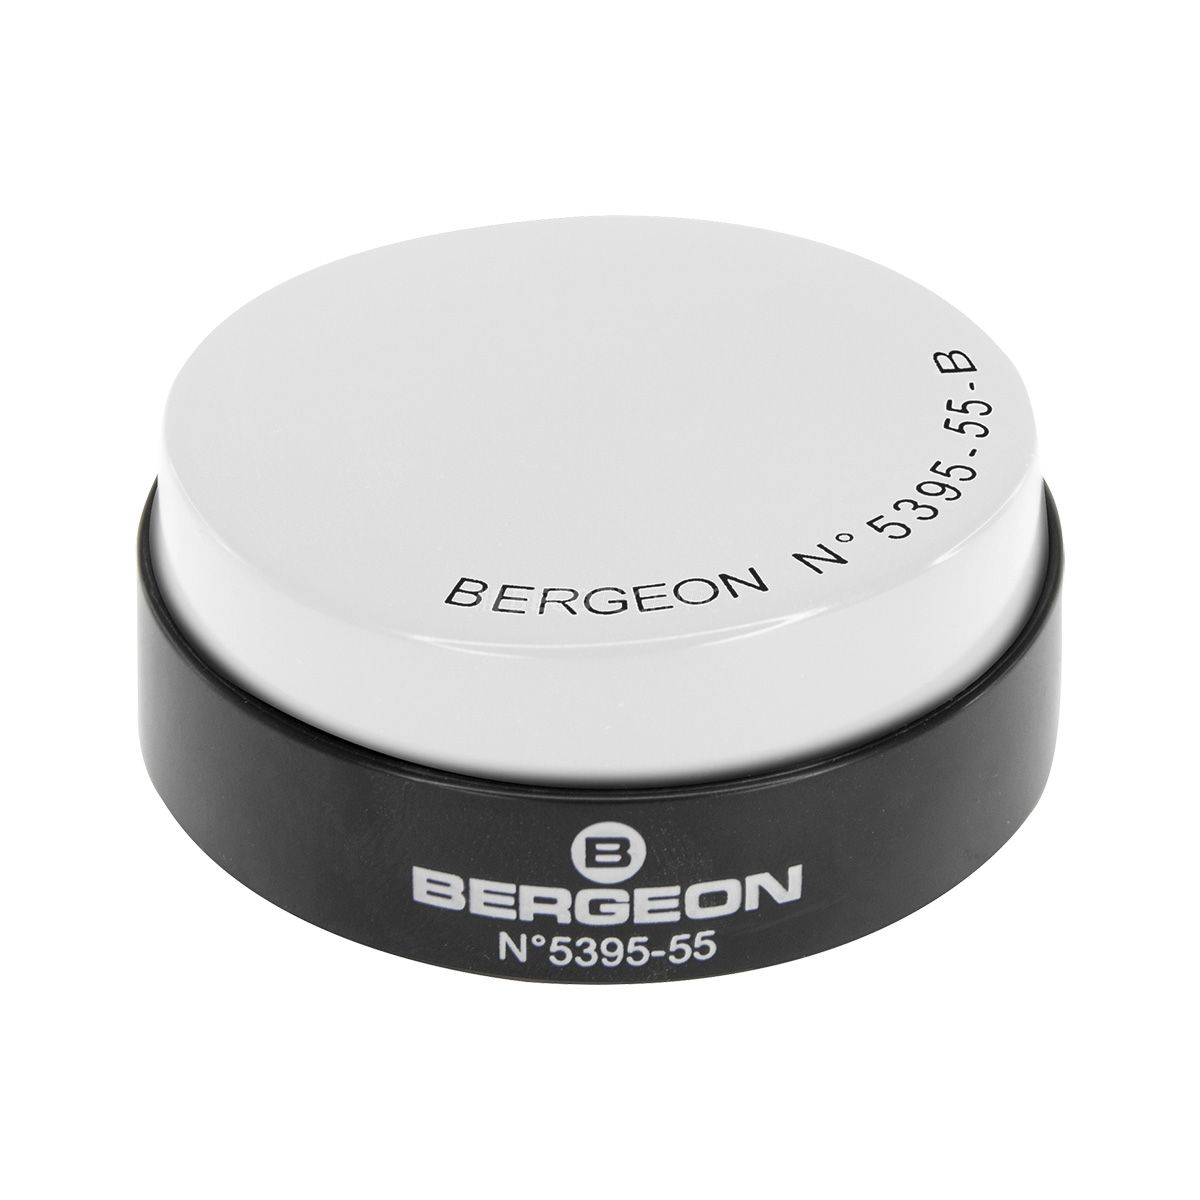 Bergeon 5395-55-B coussin d'emboîtage, gel, blanc, Ø 55 mm